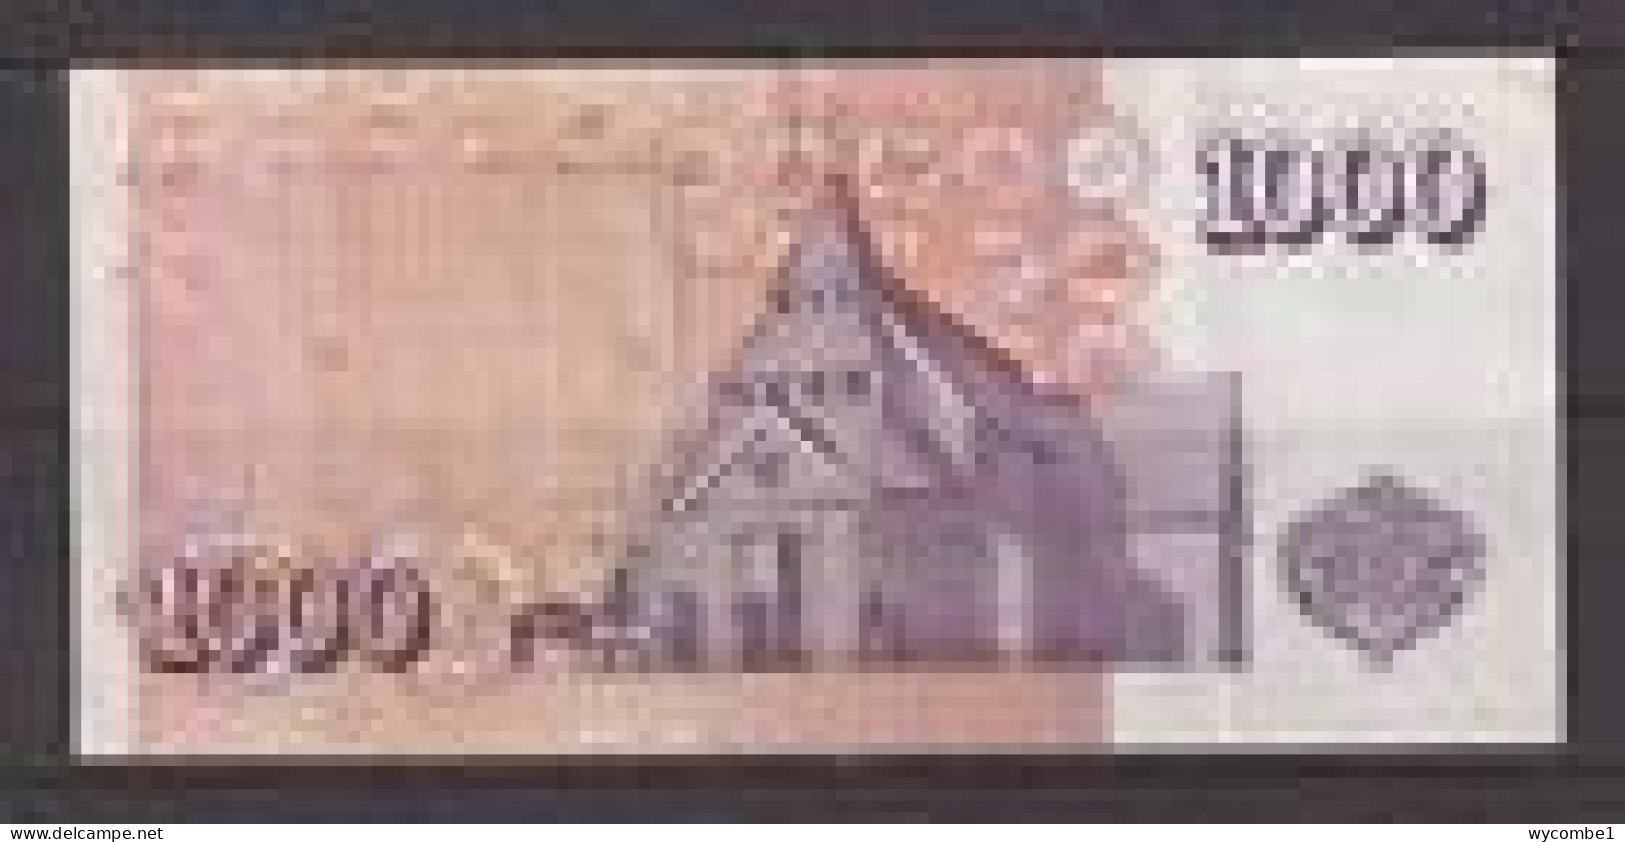 ICELAND - 2001 1000 Kronur Circulated Banknote - Iceland